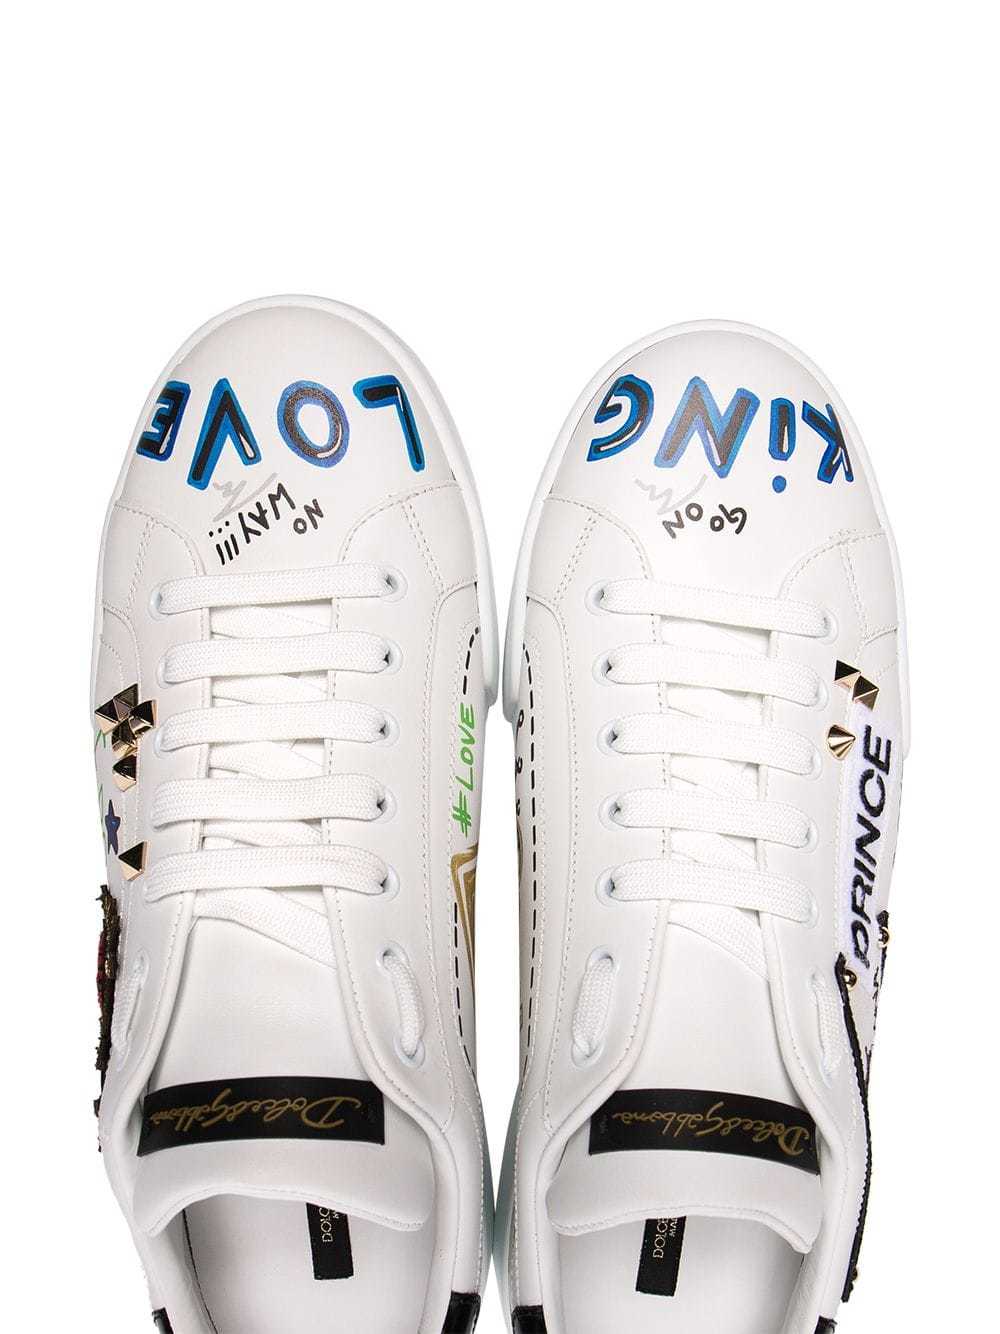 Dolce & Gabbana Prince Graffiti Print Sneakers, $895  |  Lookastic